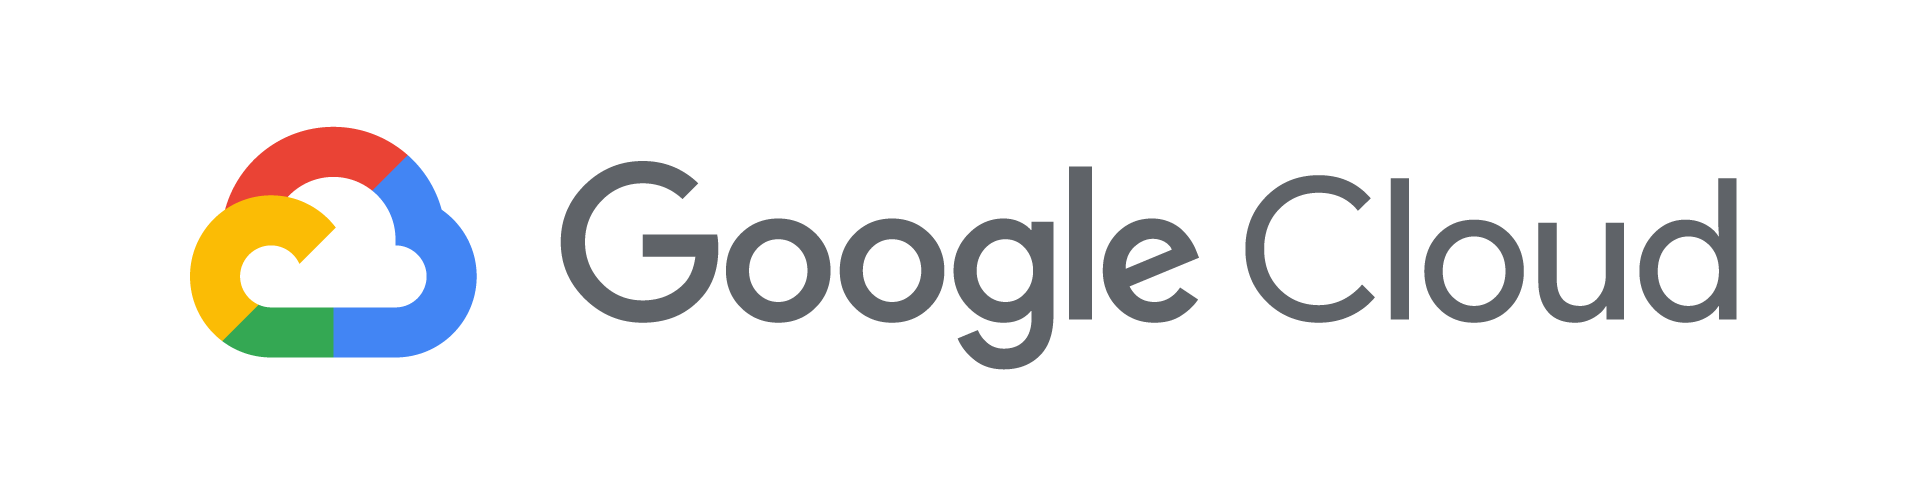 Google Cloud Logo - Google Cloud Logo